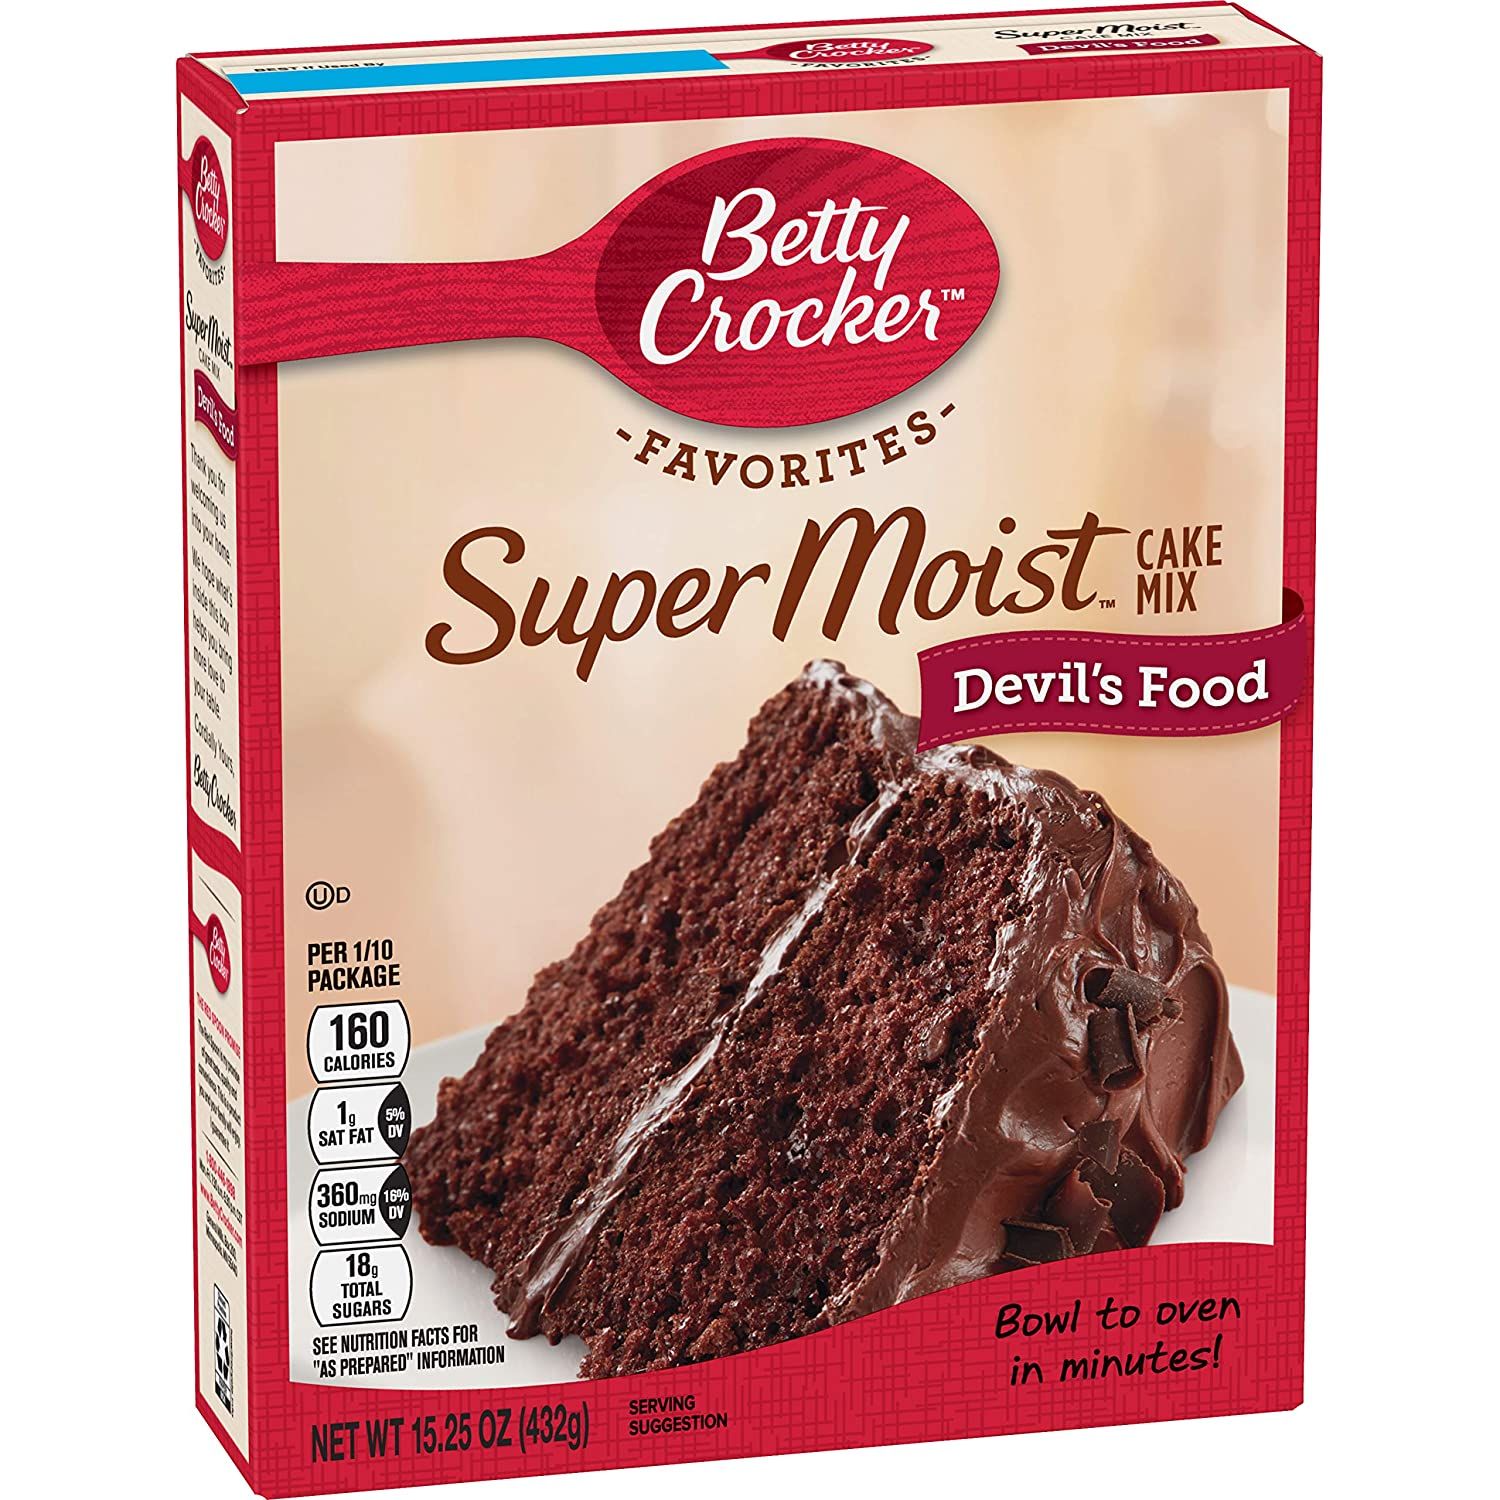 Betty Crocker Super Moist Cake Mix Devil's Food Image